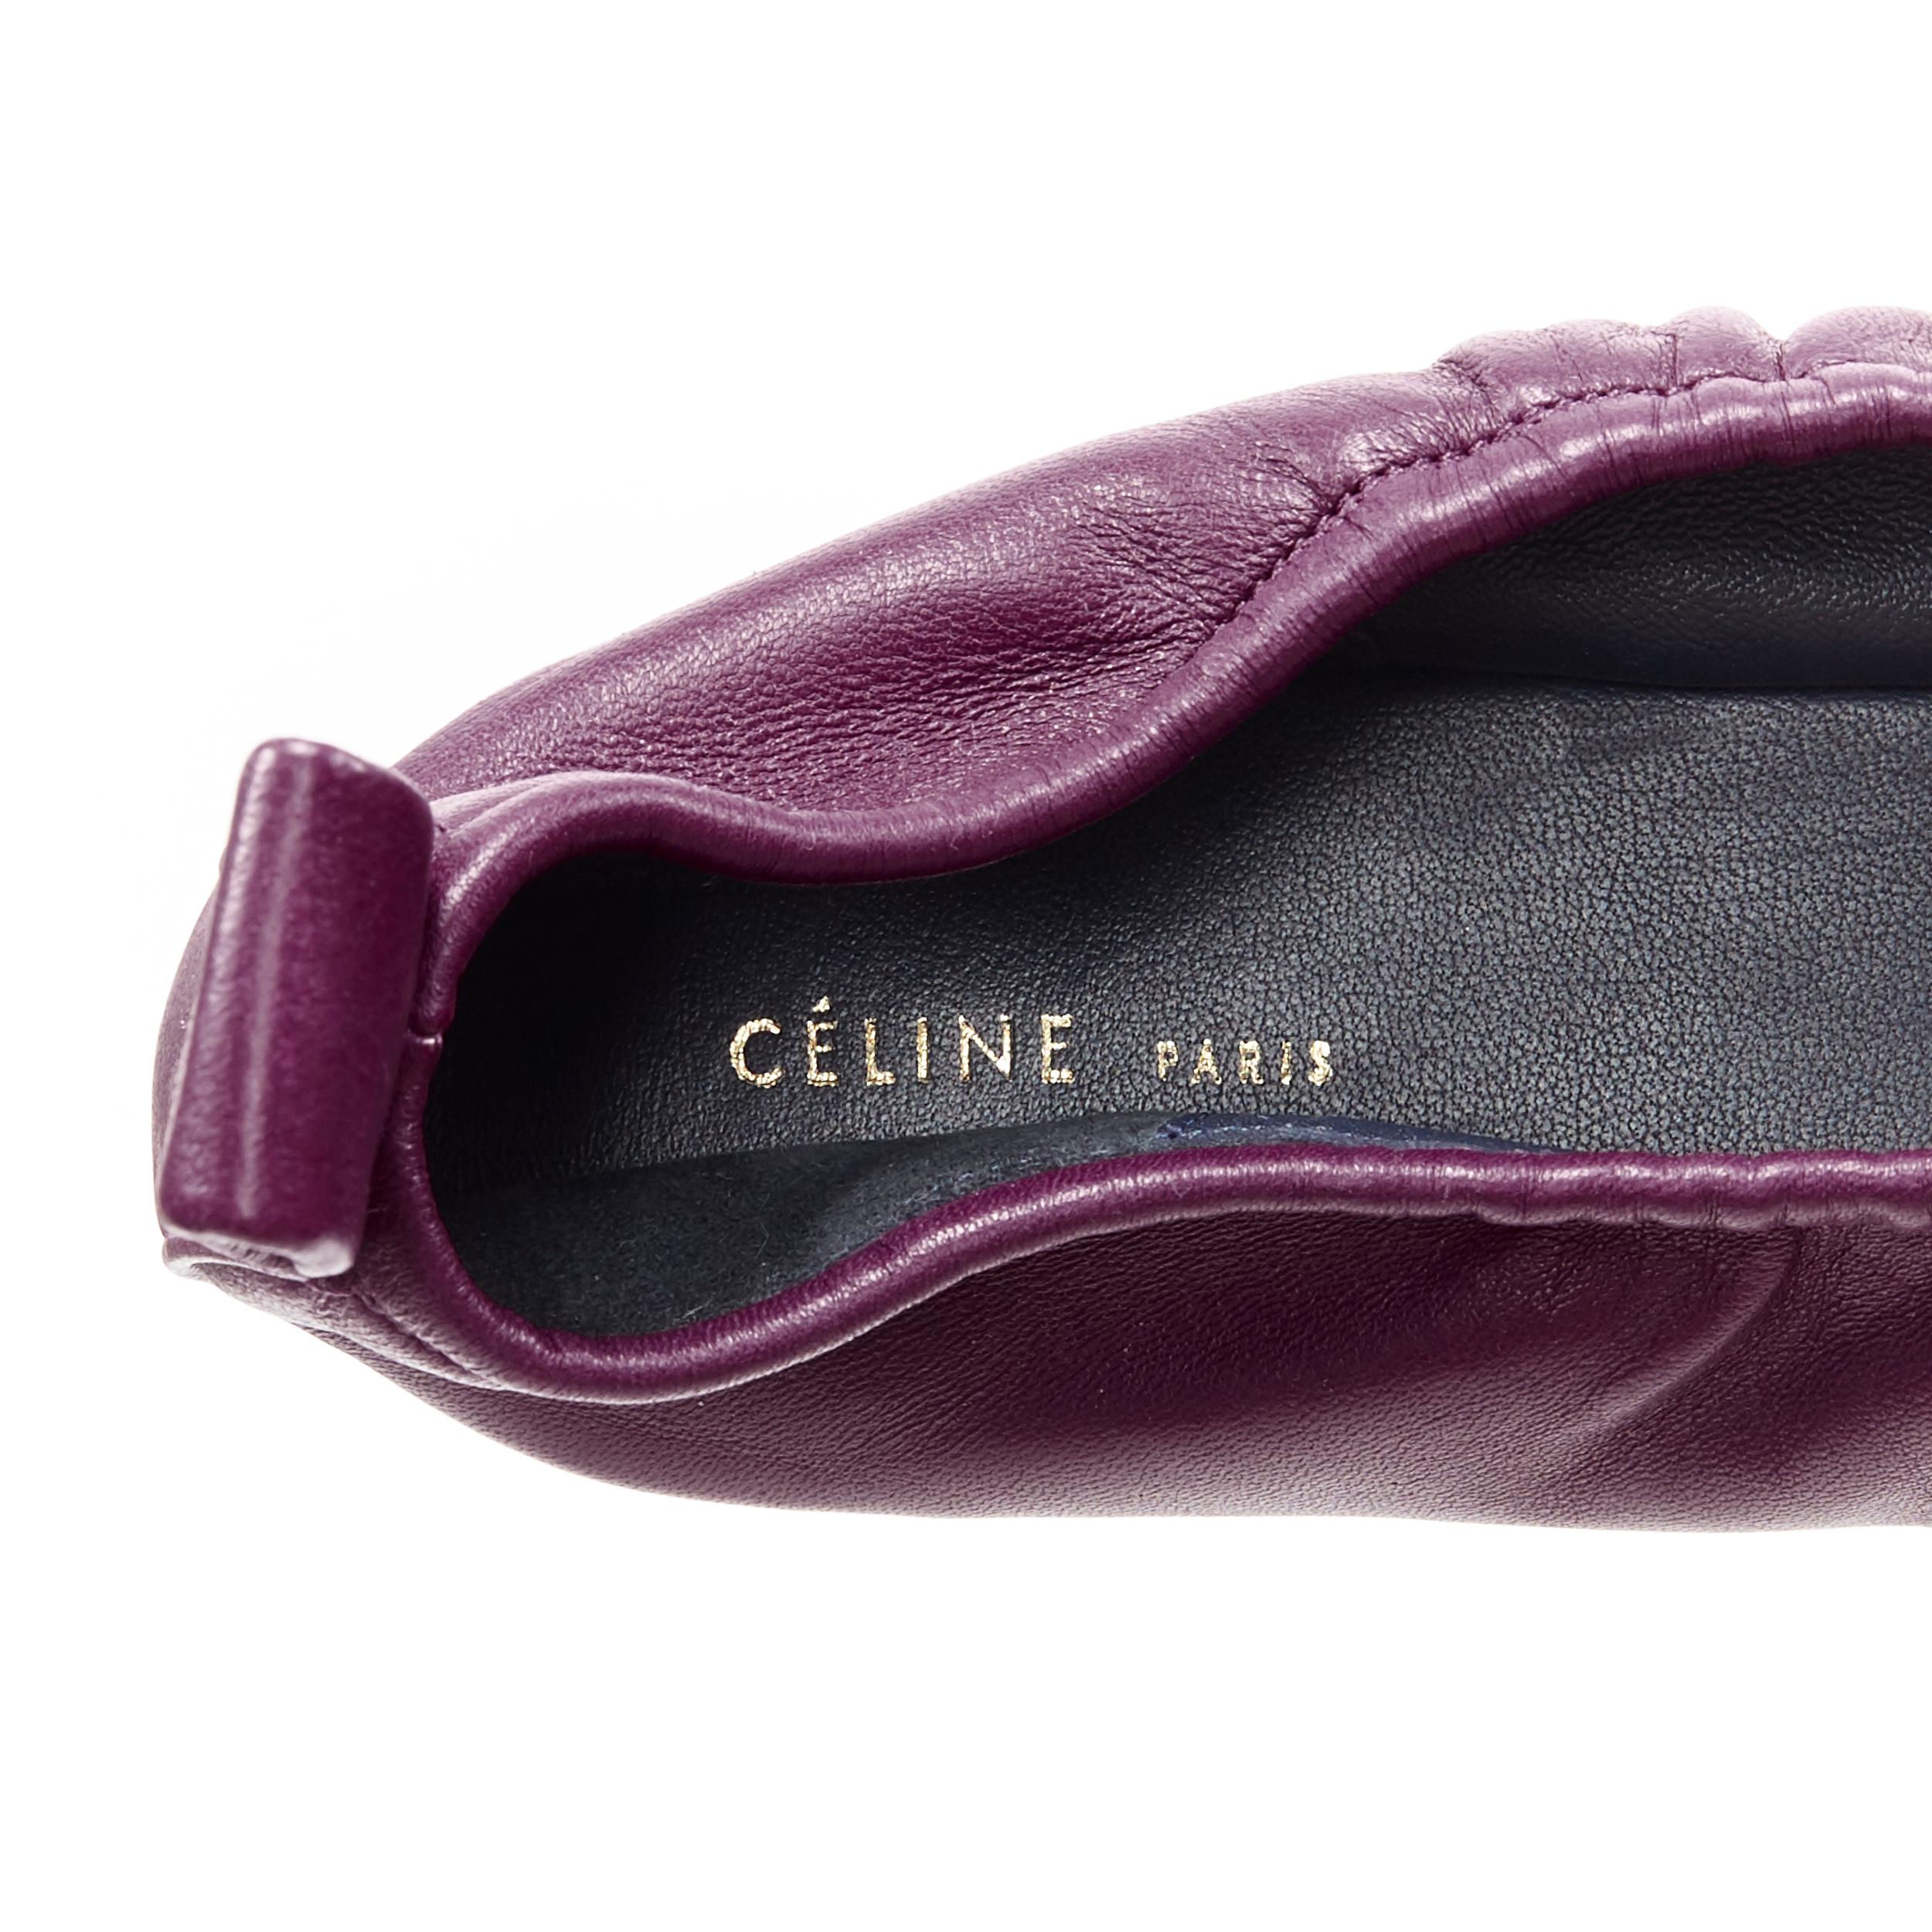 CELINE PHOEBE PHILO aubergine purple soft leather round ballerina flat EU37.5 1